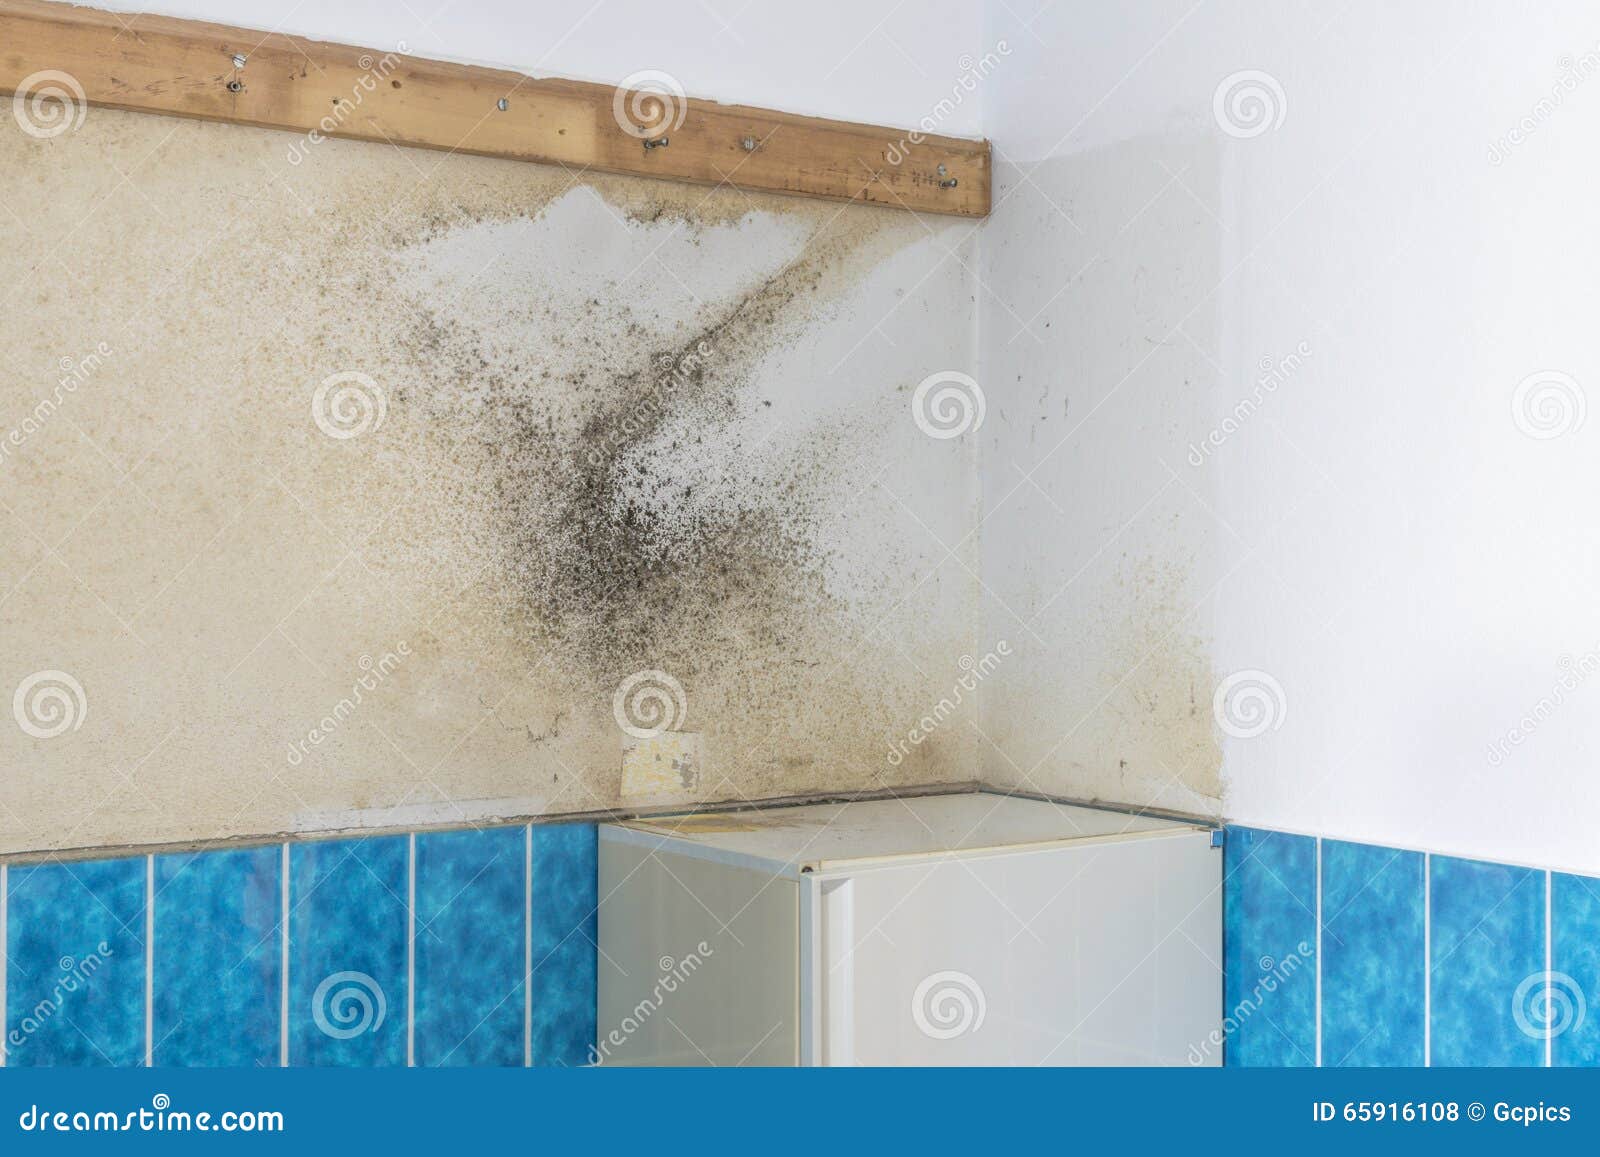 Moldy Mildew On A Bathroom Wall Stock Photo Image 65916108